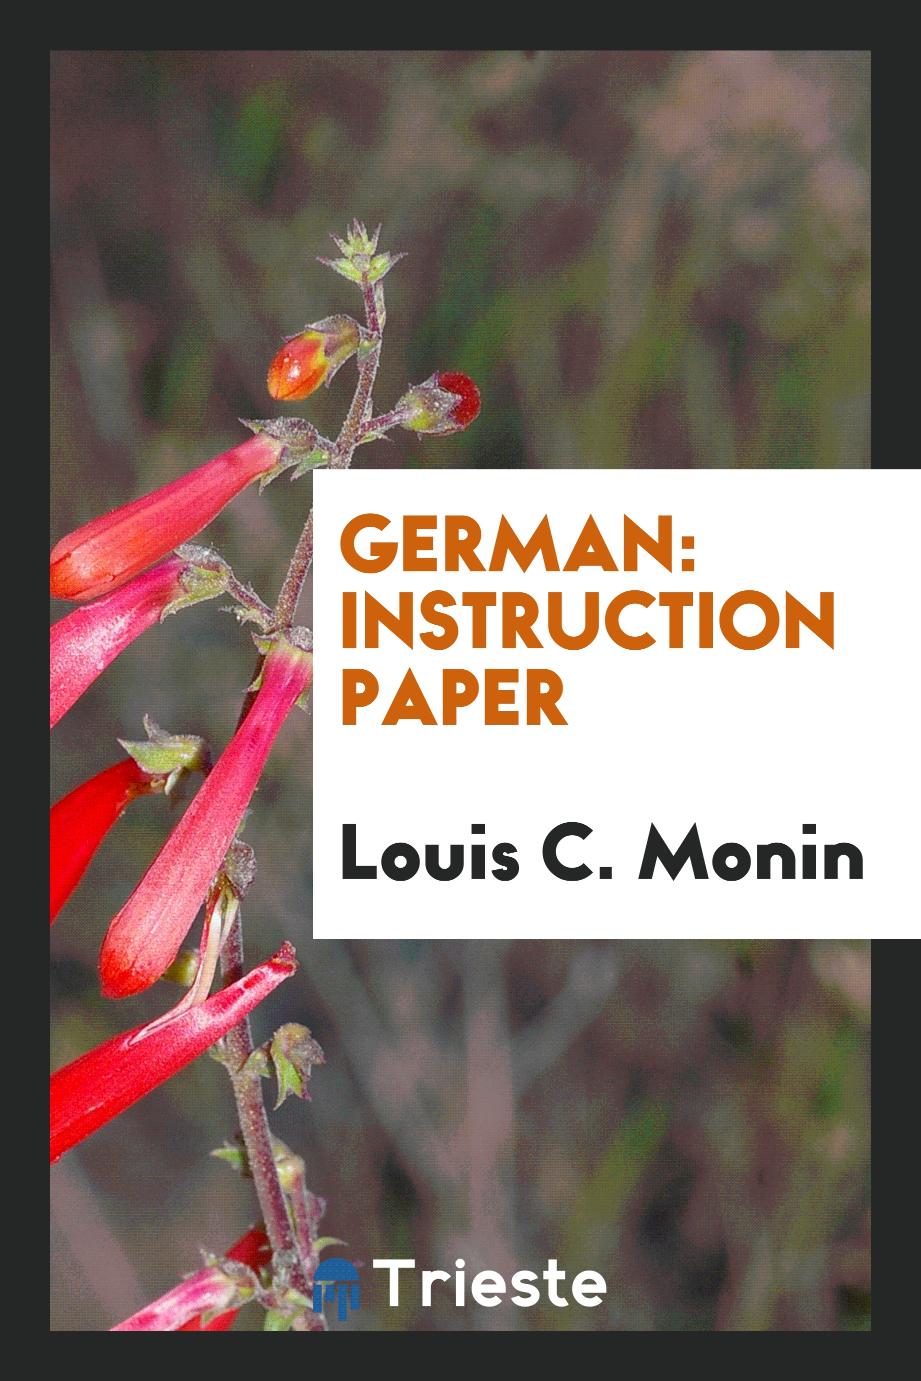 German: Instruction Paper